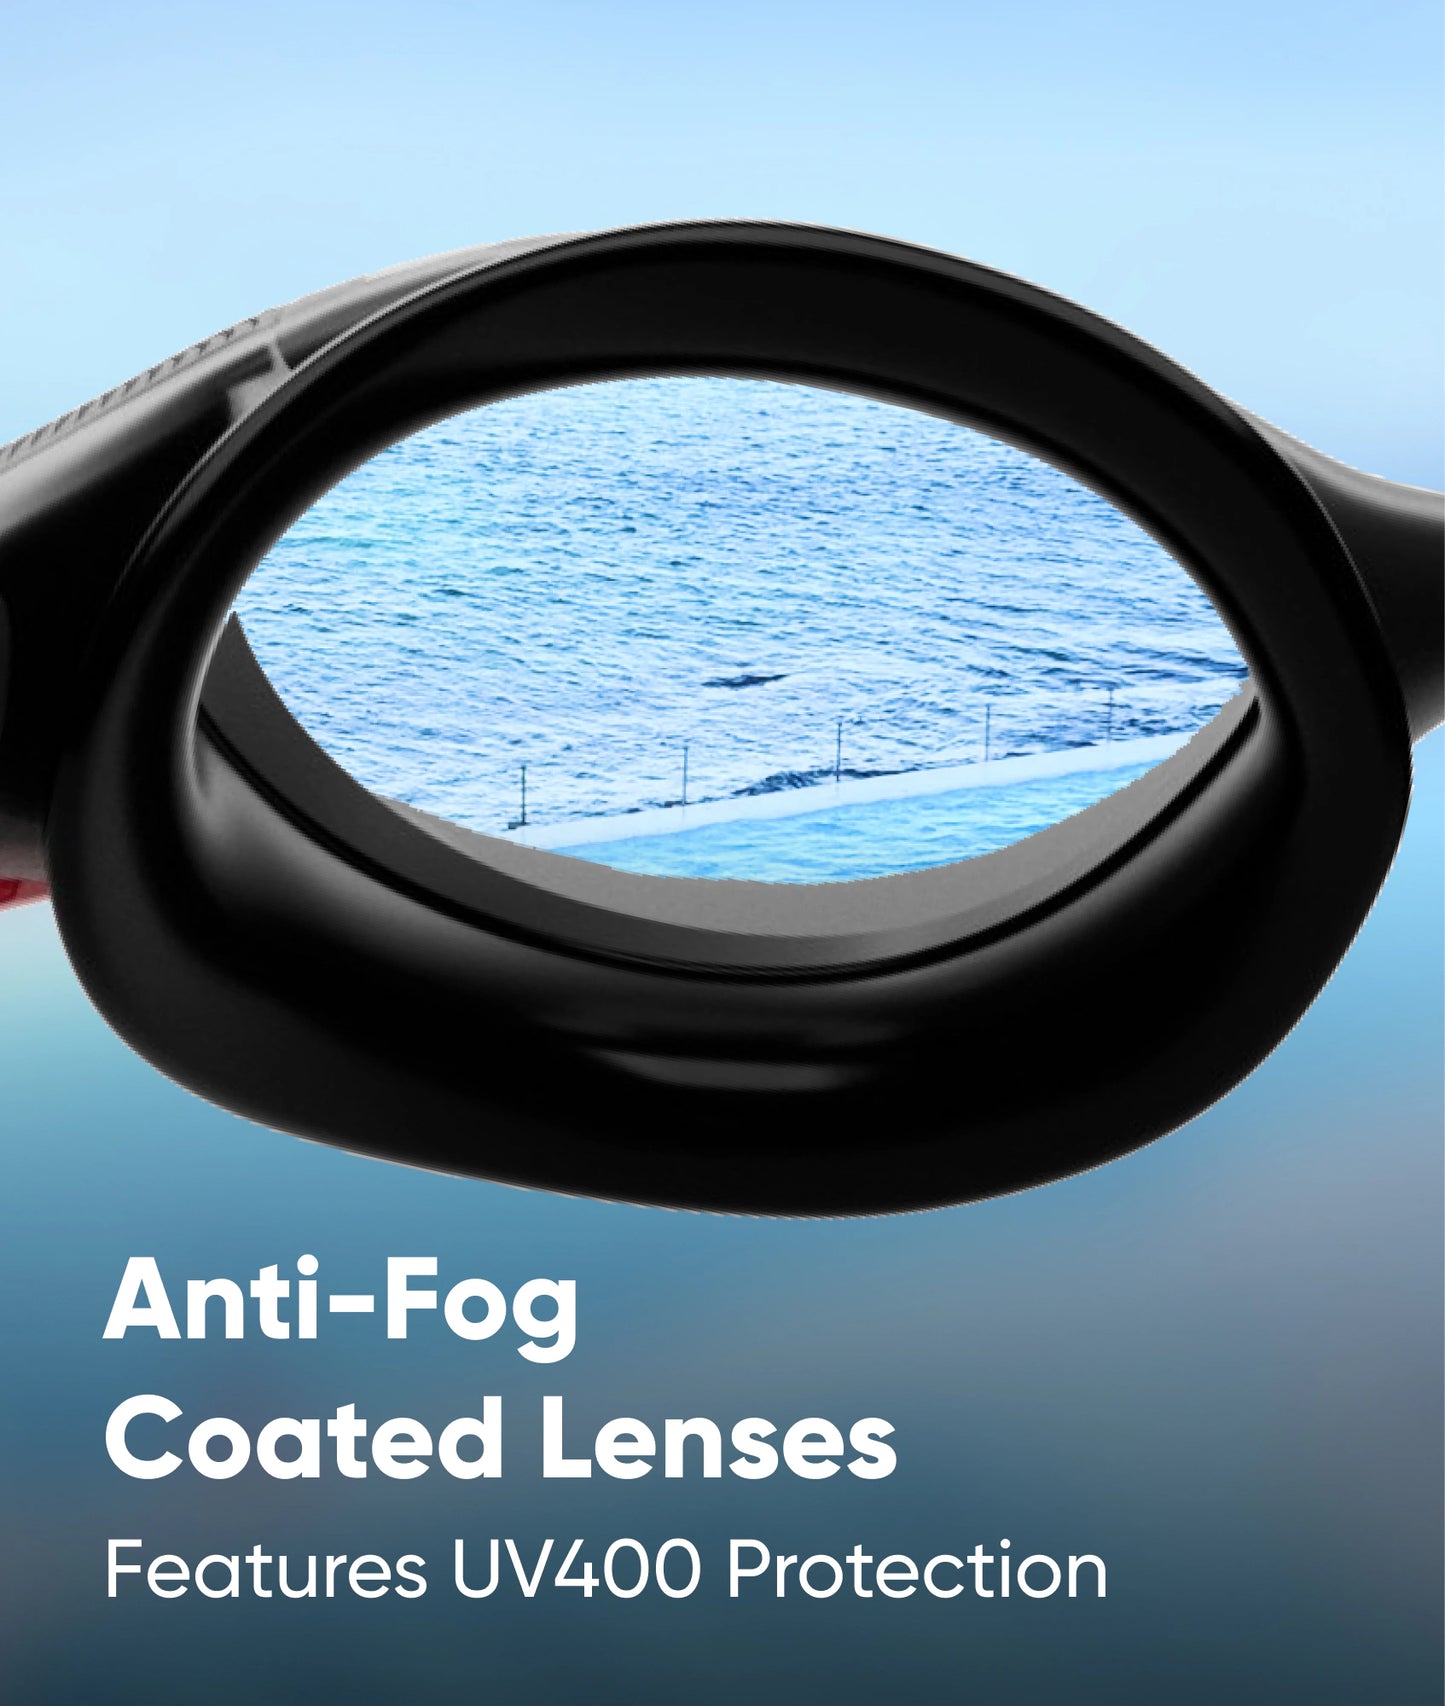 Unisex Adult Biofuse 2.0 Tint-Lens Swim Goggles - Tint & Red